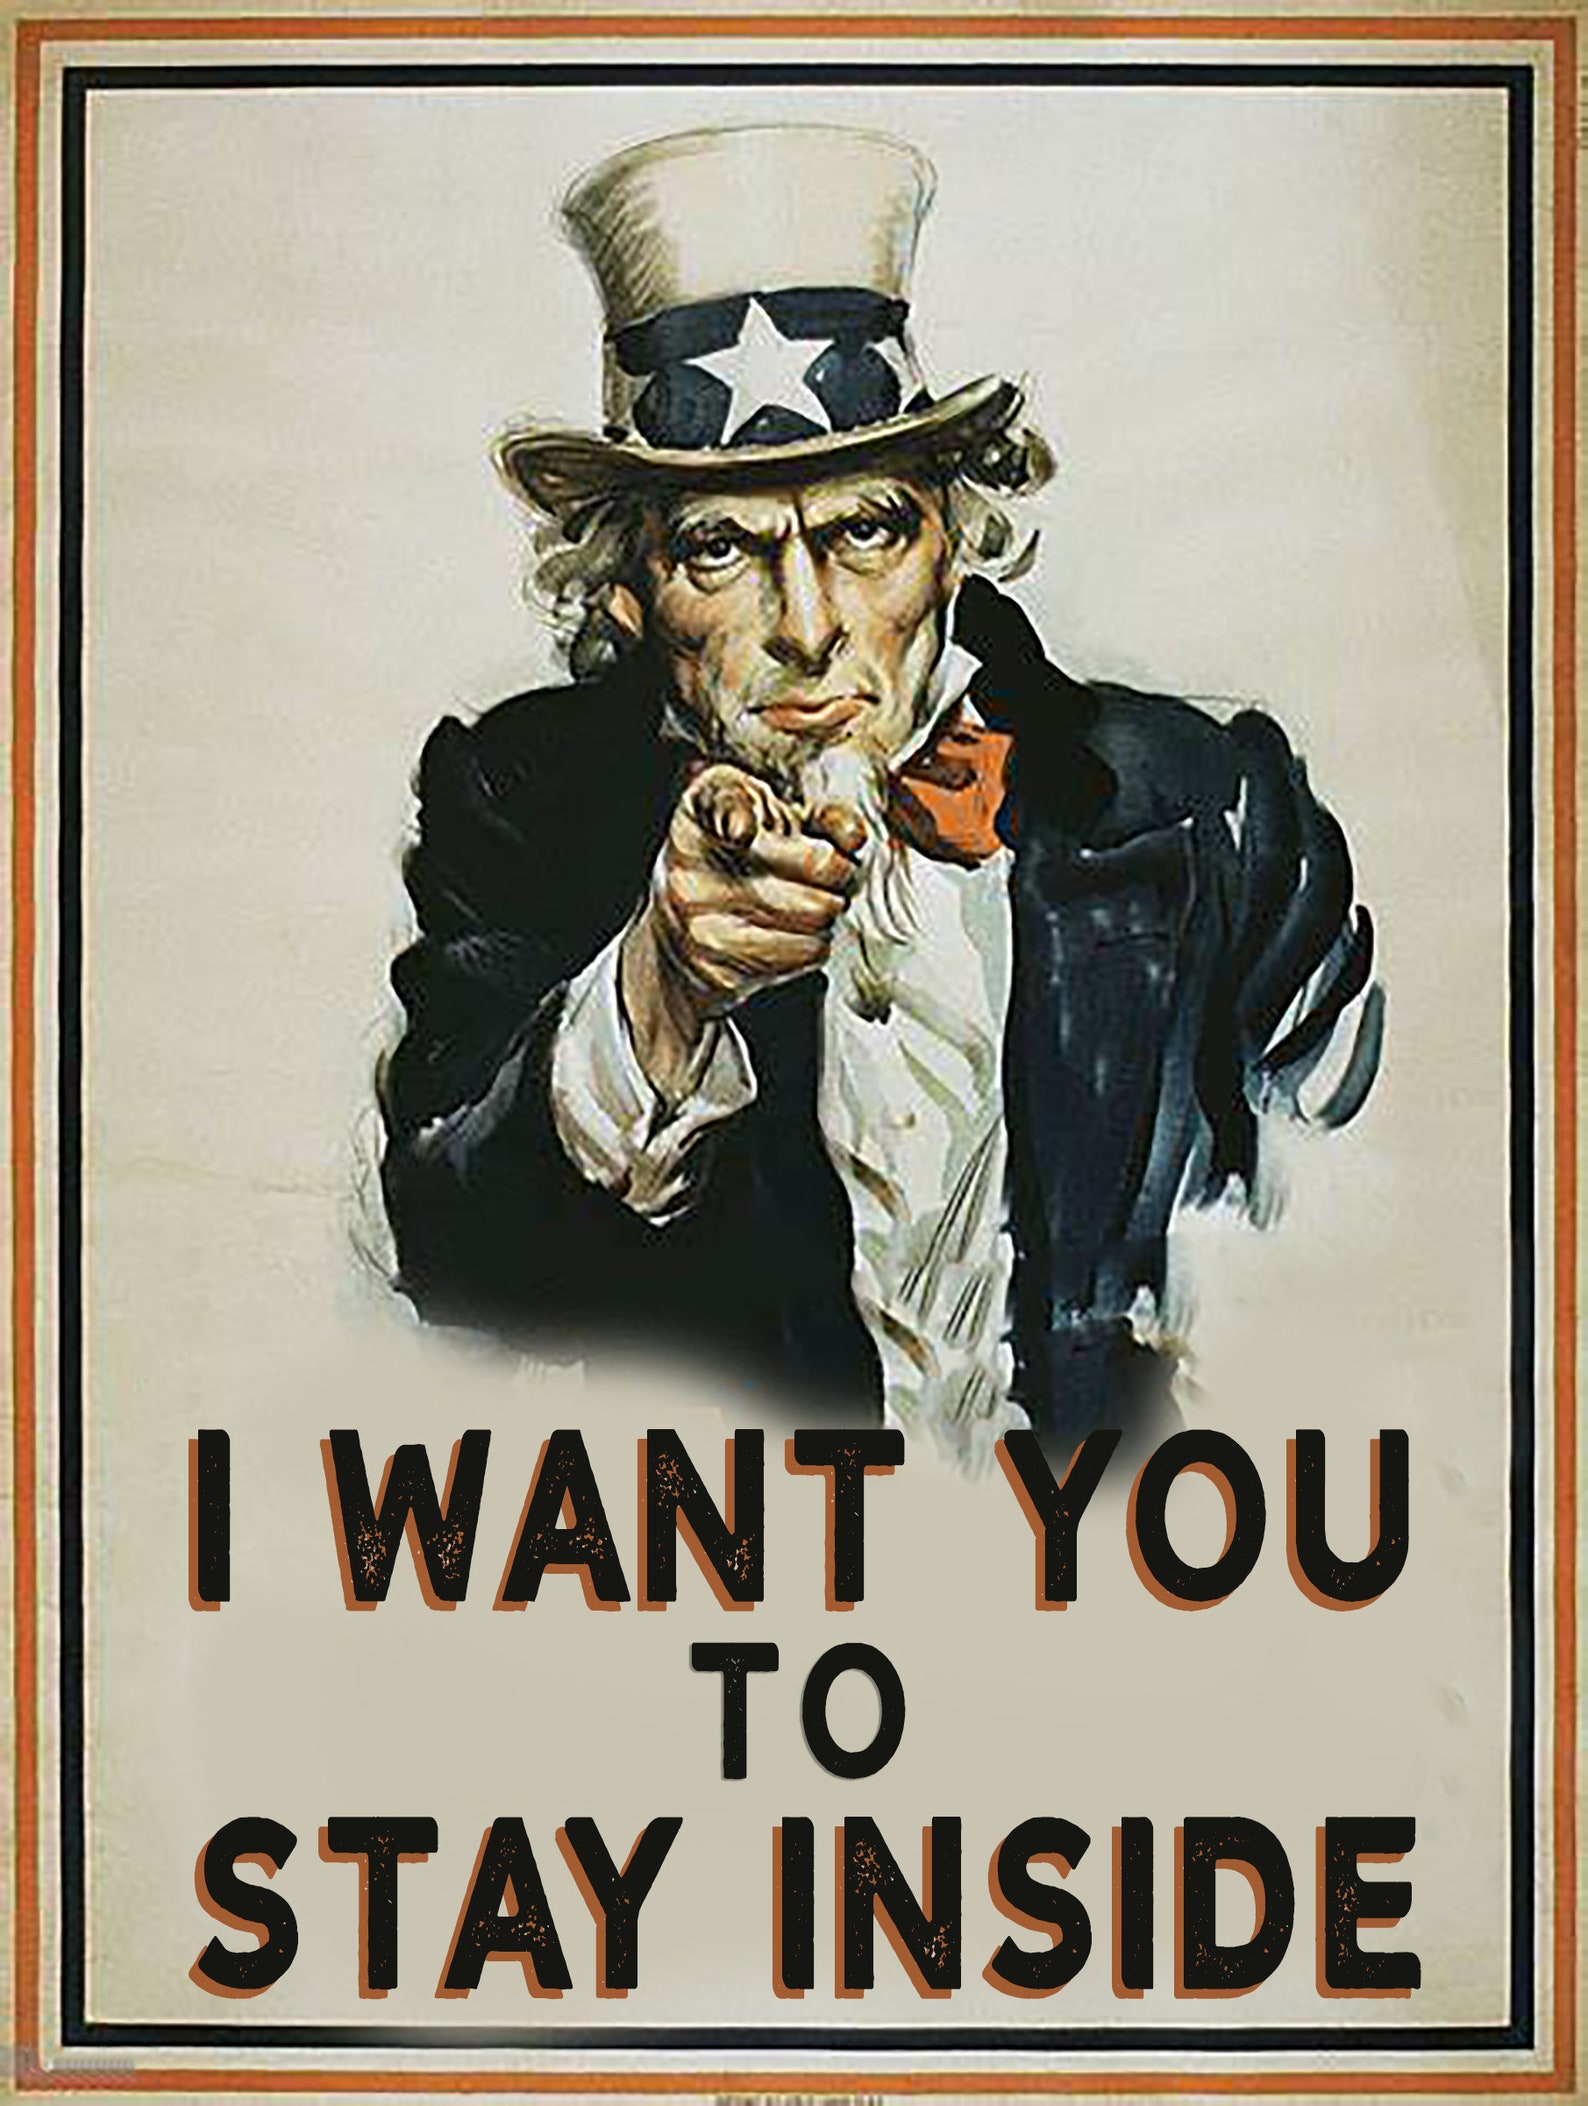 Постер сам. Uncle Sam poster. Дядя Сэм i want you. "Uncle Sam wants you плакат. Ты нужен дяде Сэму плакат.